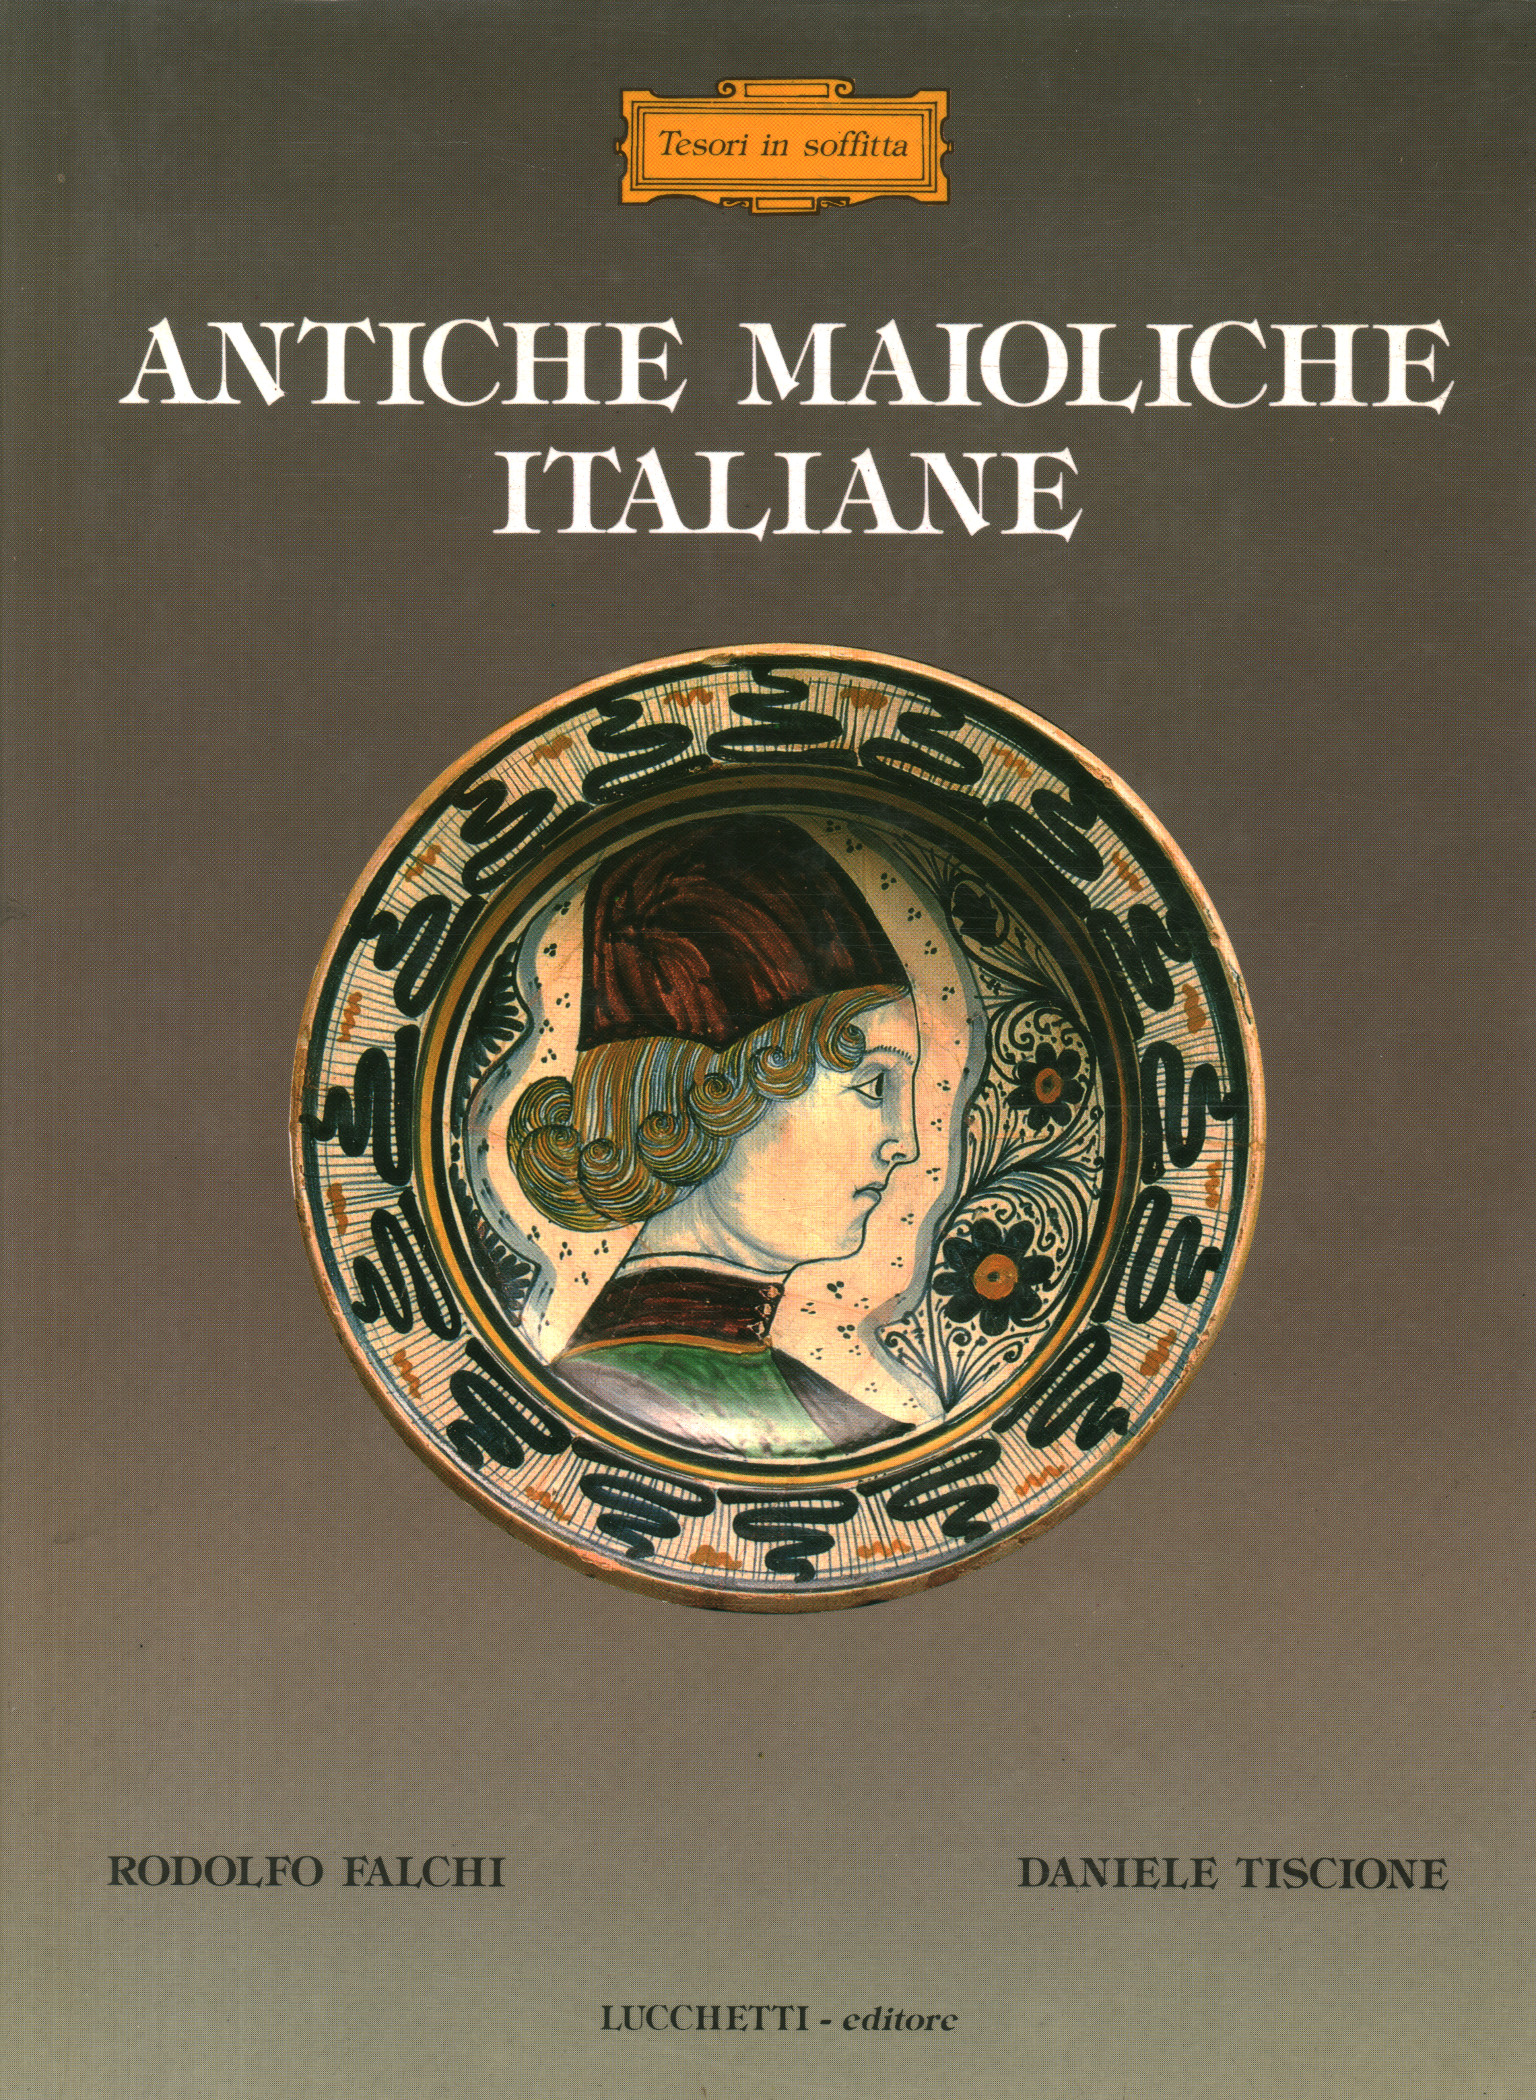 Ancient Italian majolica